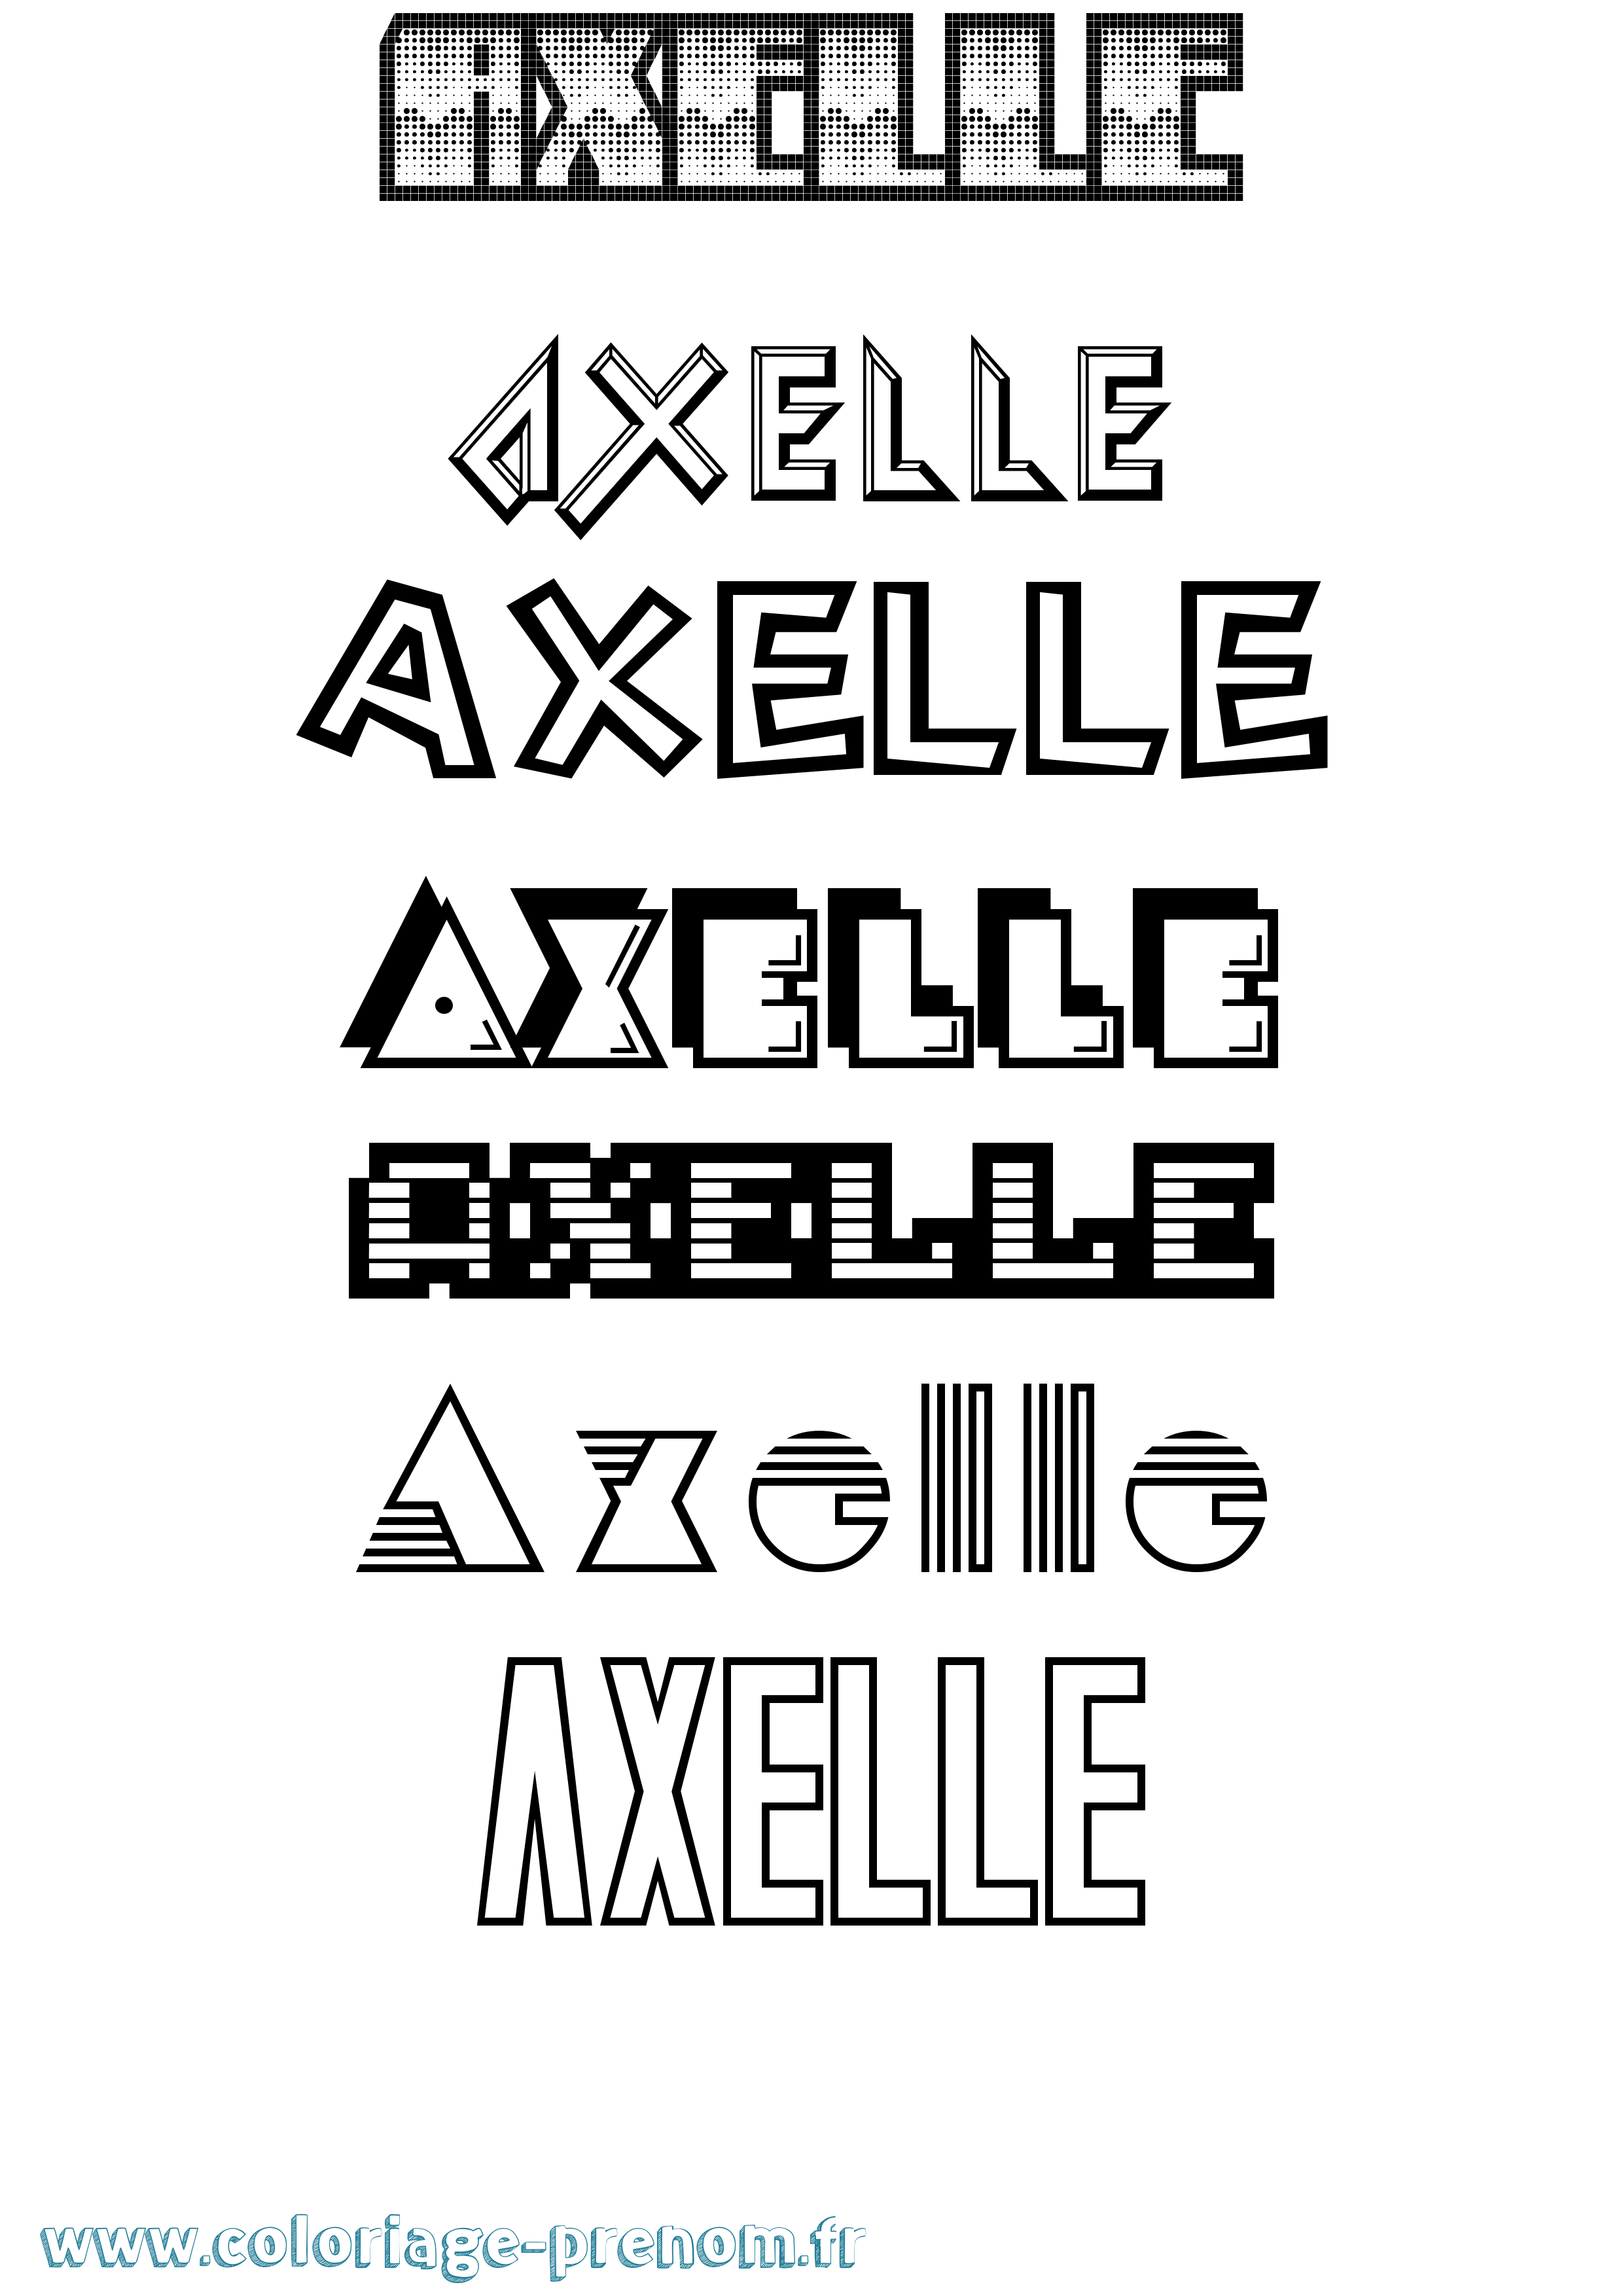 Coloriage prénom Axelle